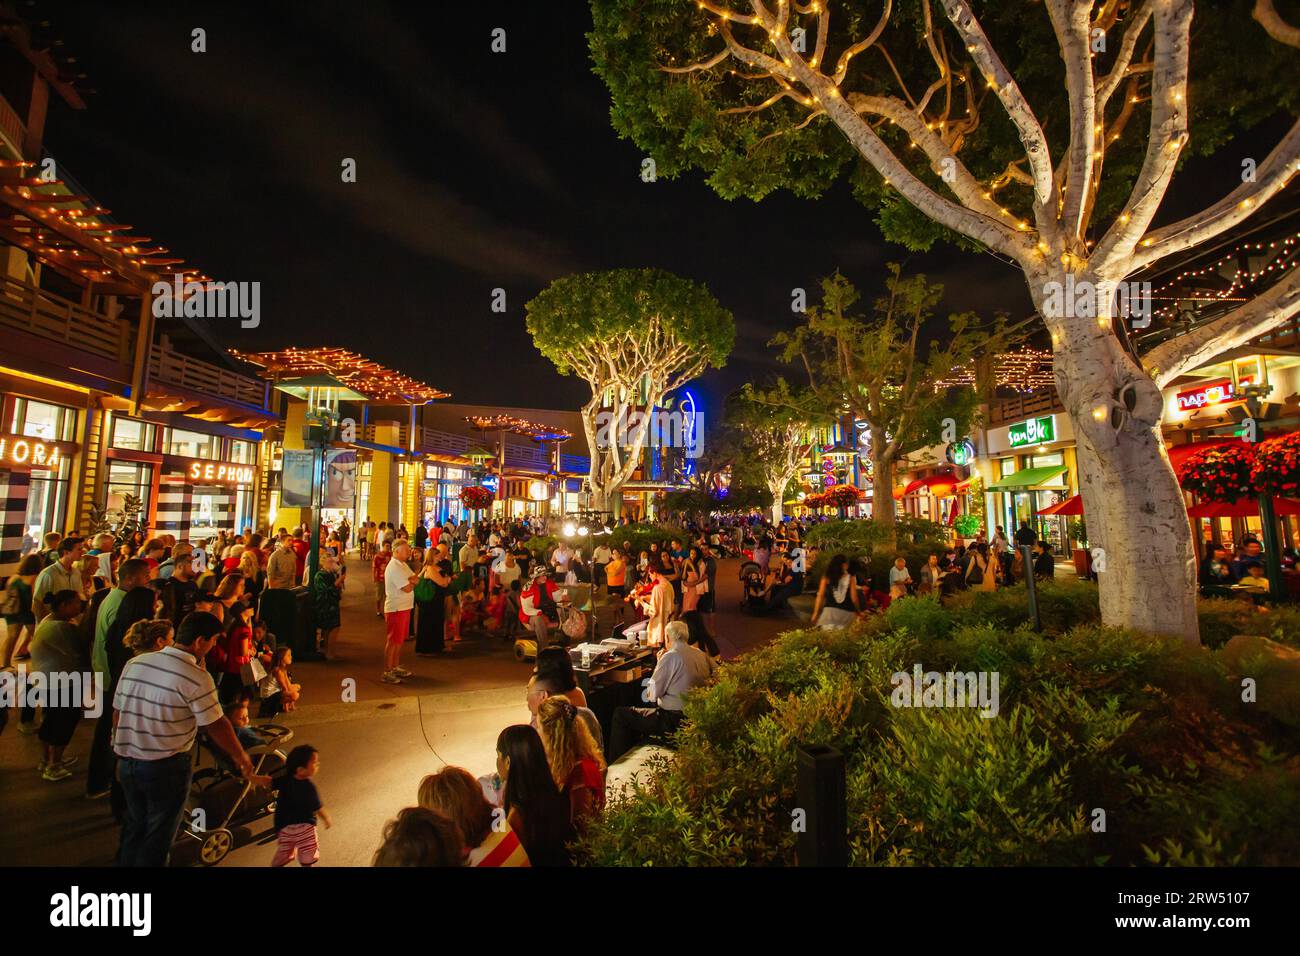 Los Angeles, USA, July 13th 2014: Downtown Disney shopping precinct near Disneyland in Anaheim, Los Angeles Stock Photo